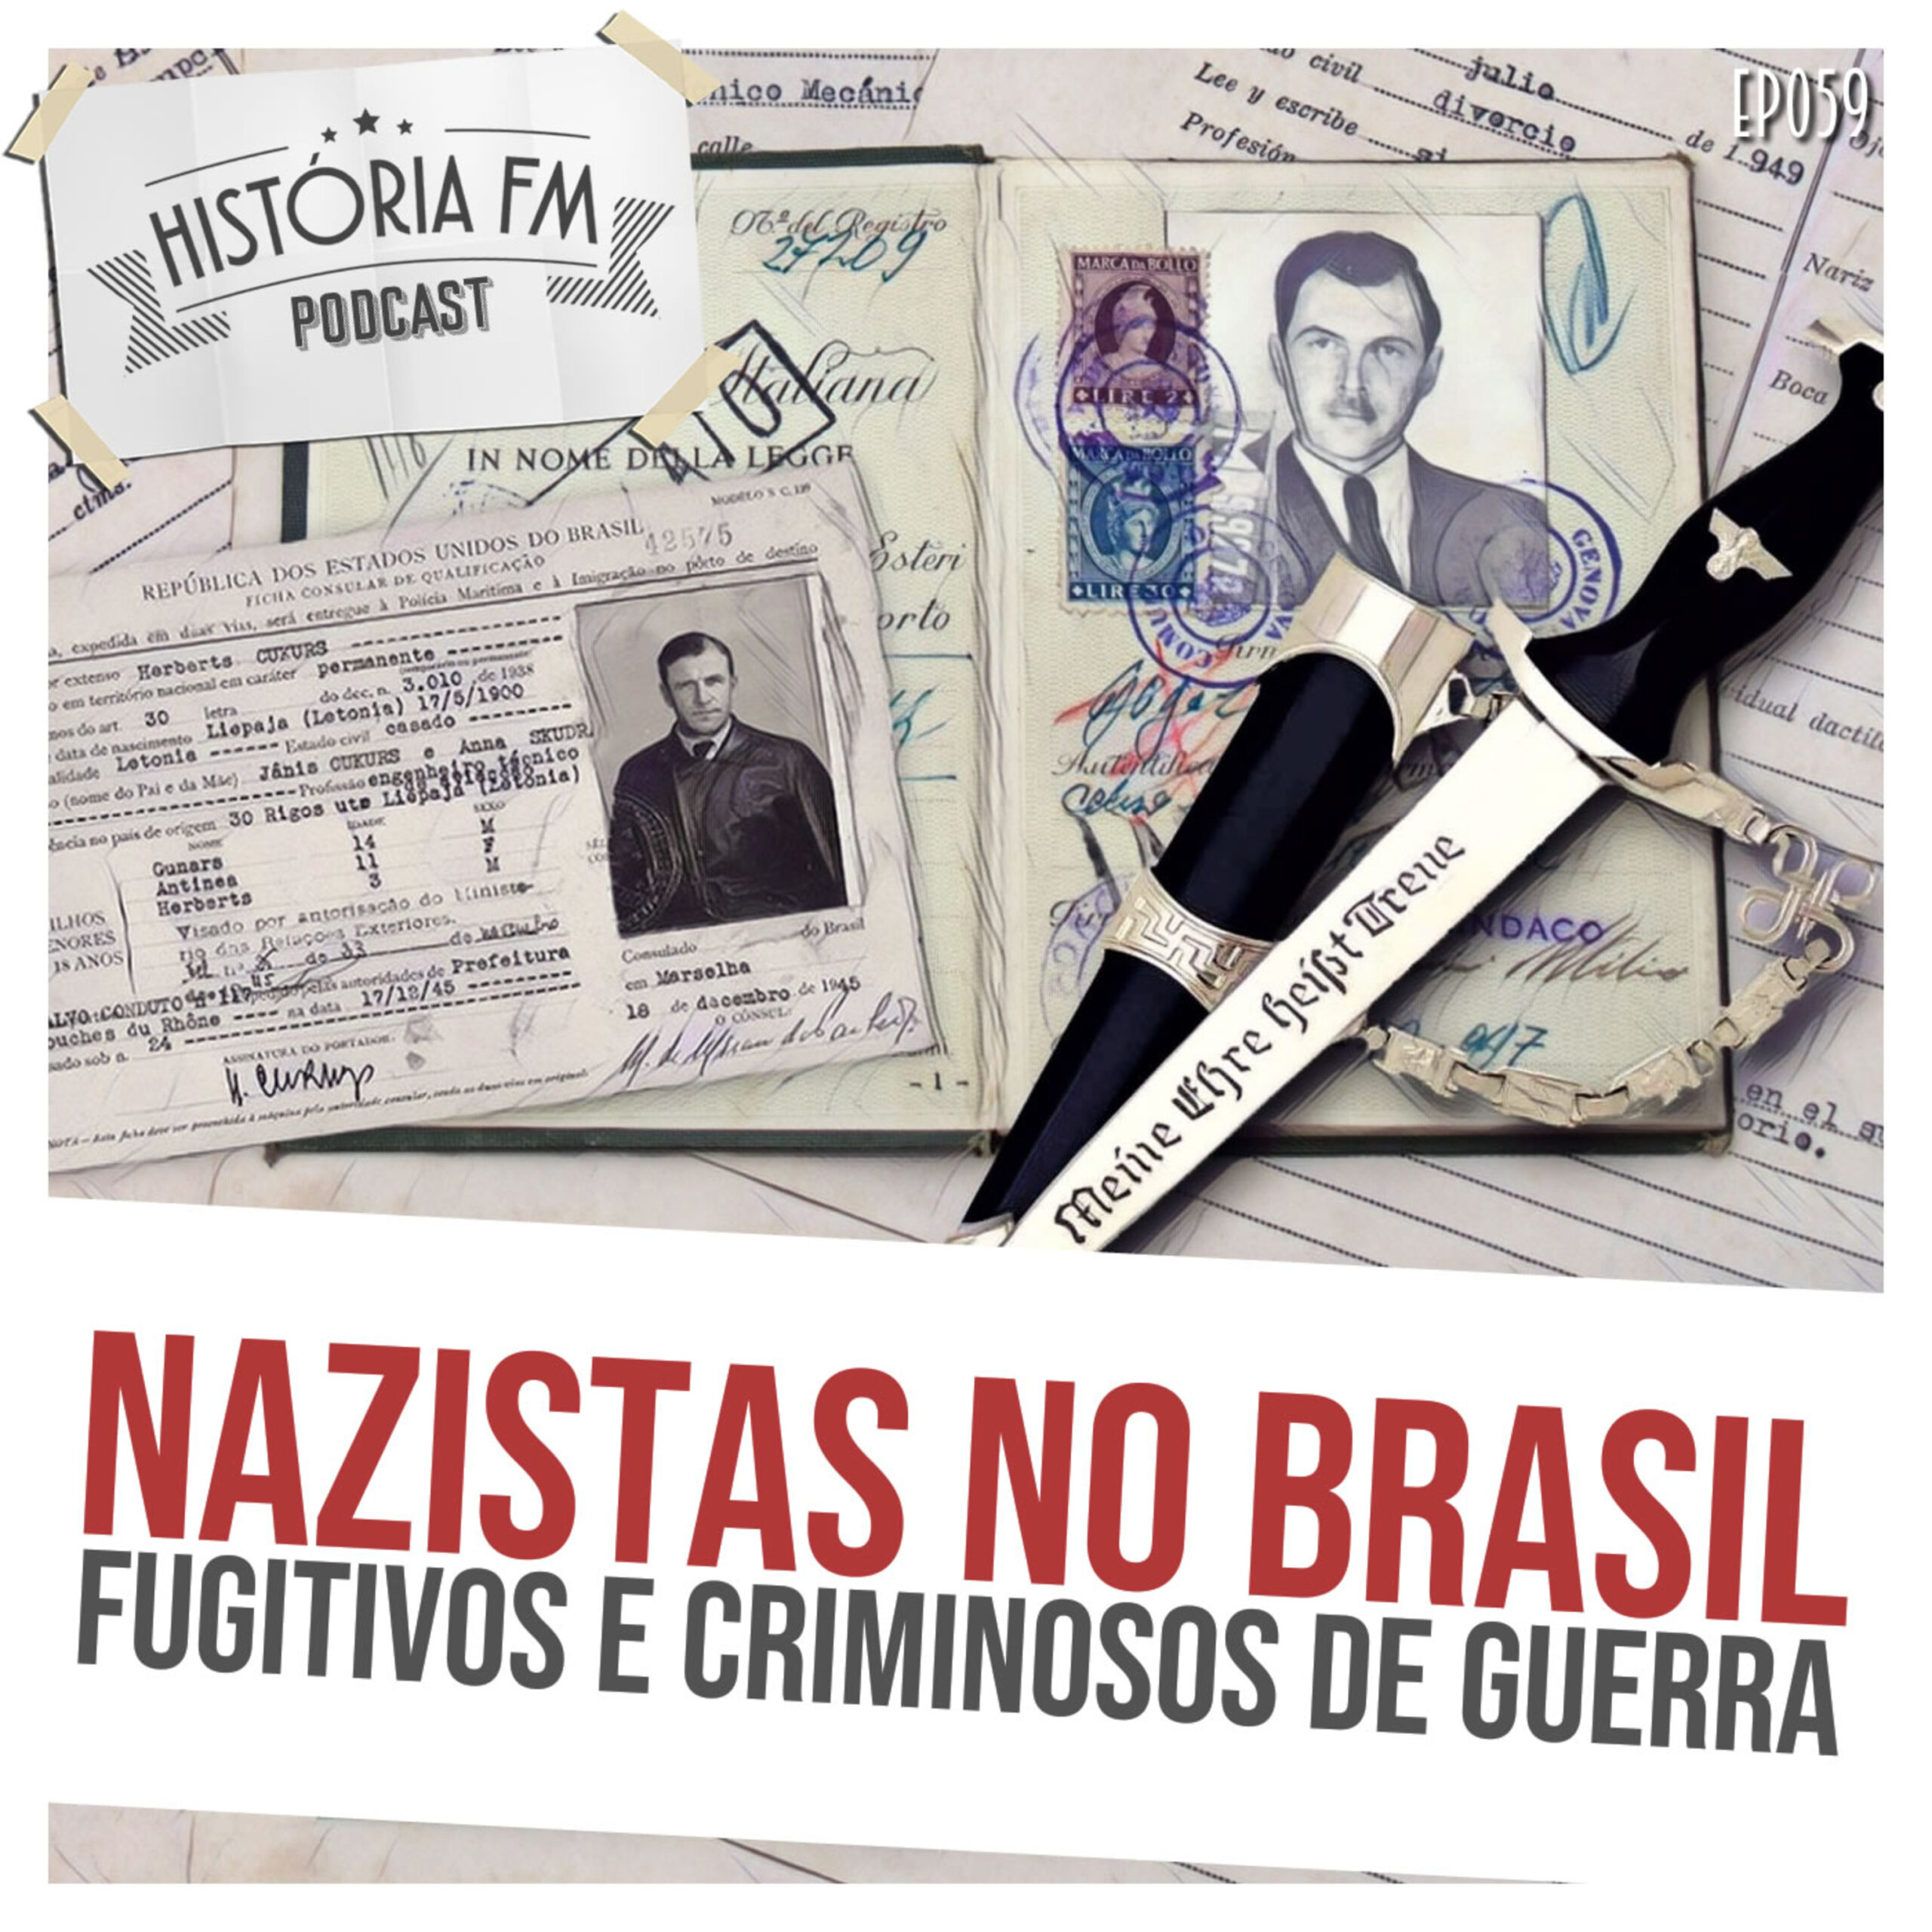 Nazistas no Brasil: fugitivos e criminosos de guerra